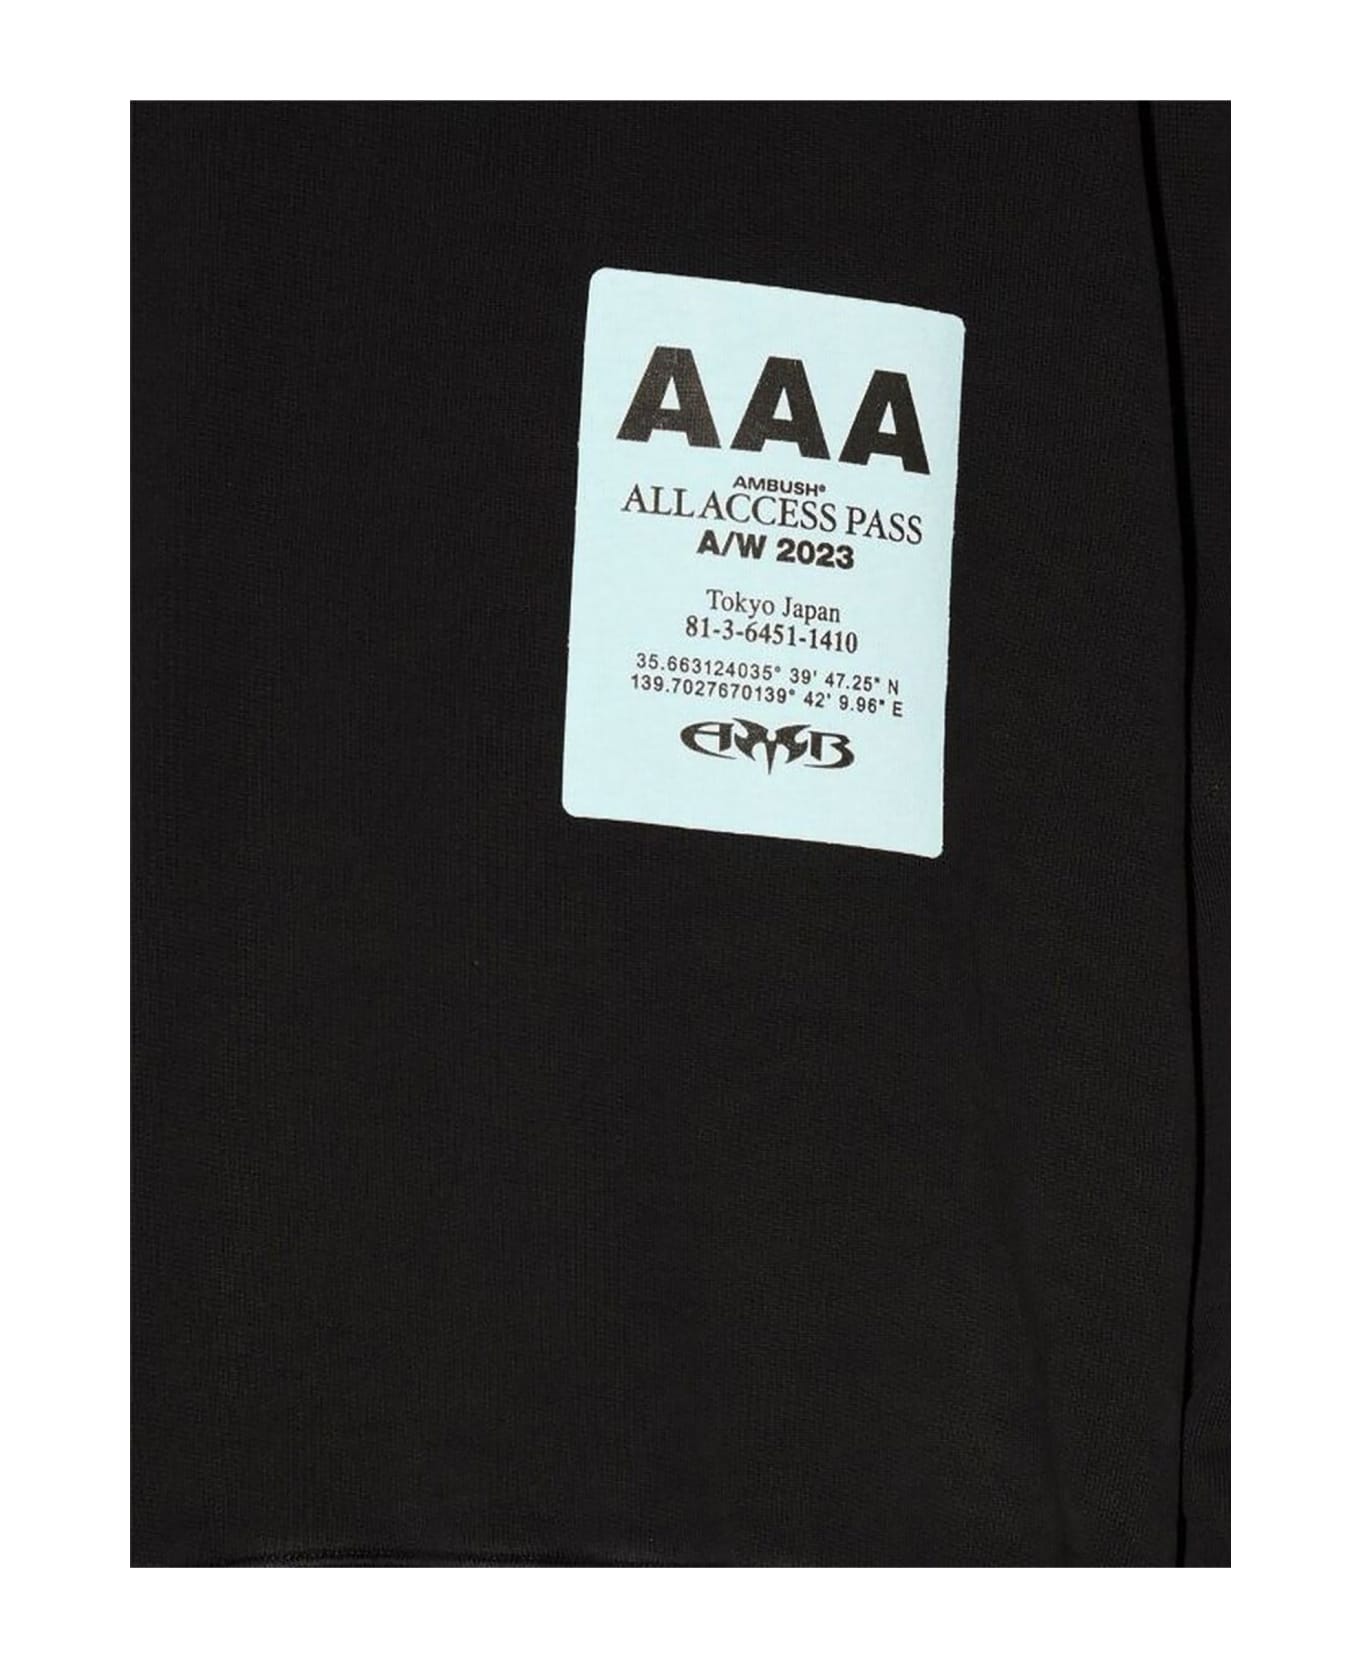 AMBUSH Black Cotton Sweatshirt - Nero